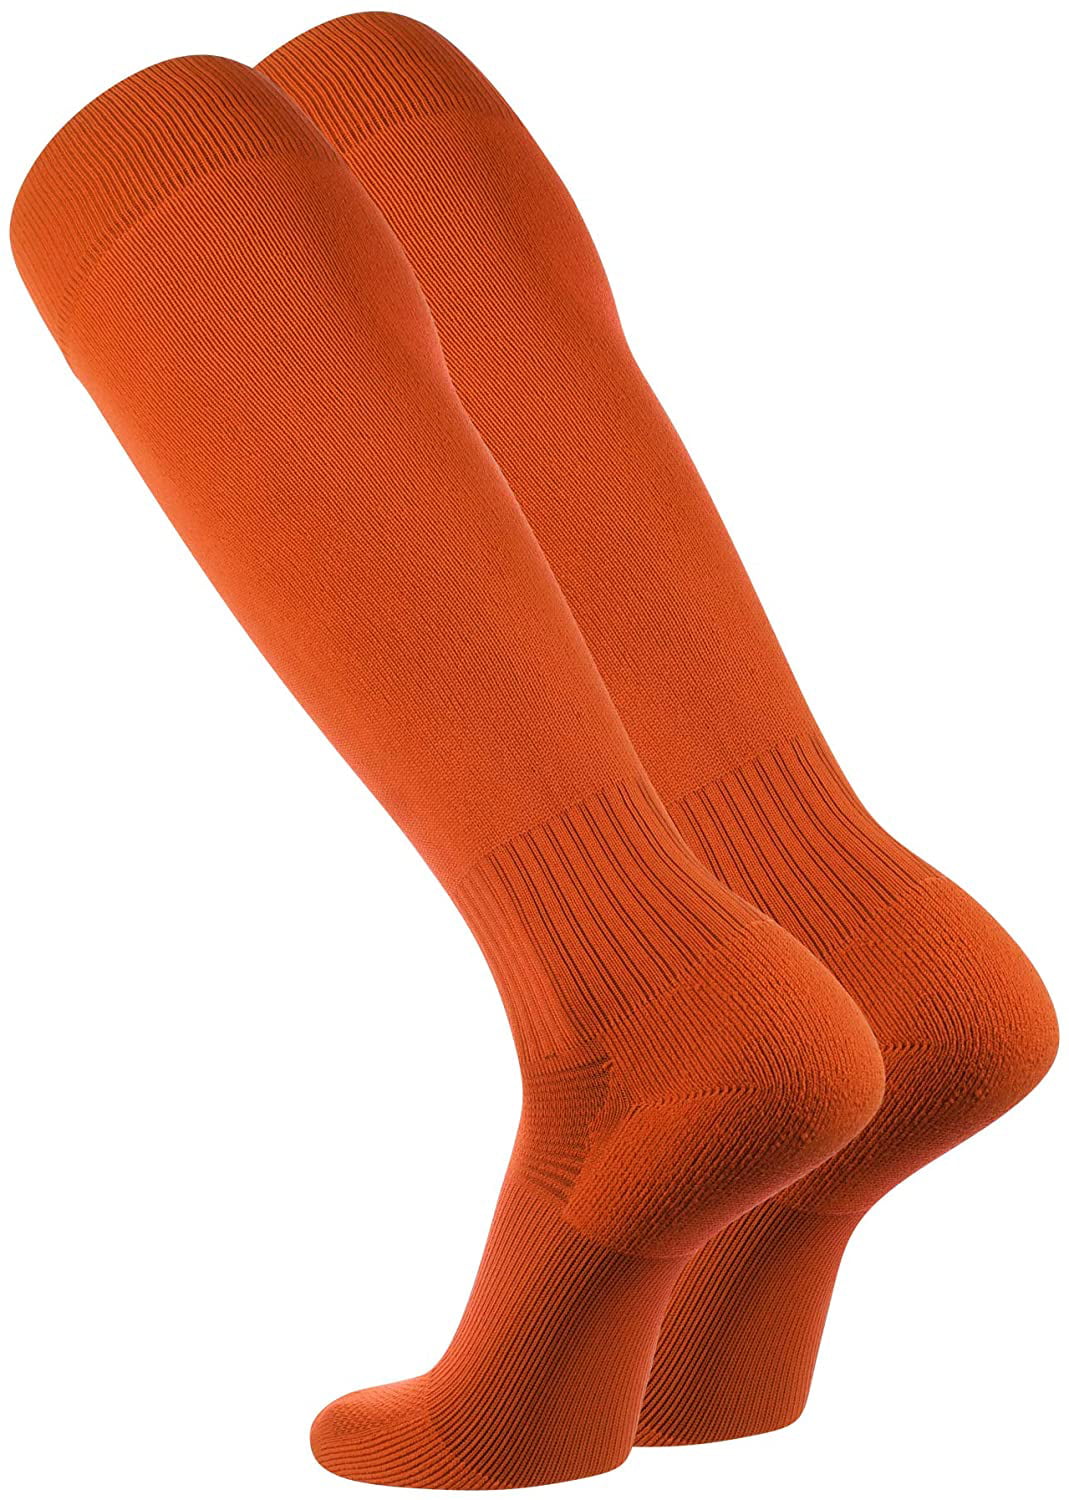 TCK Soccer Socks Lot of 3 Pair Size Large Burnt Orange New In Package 